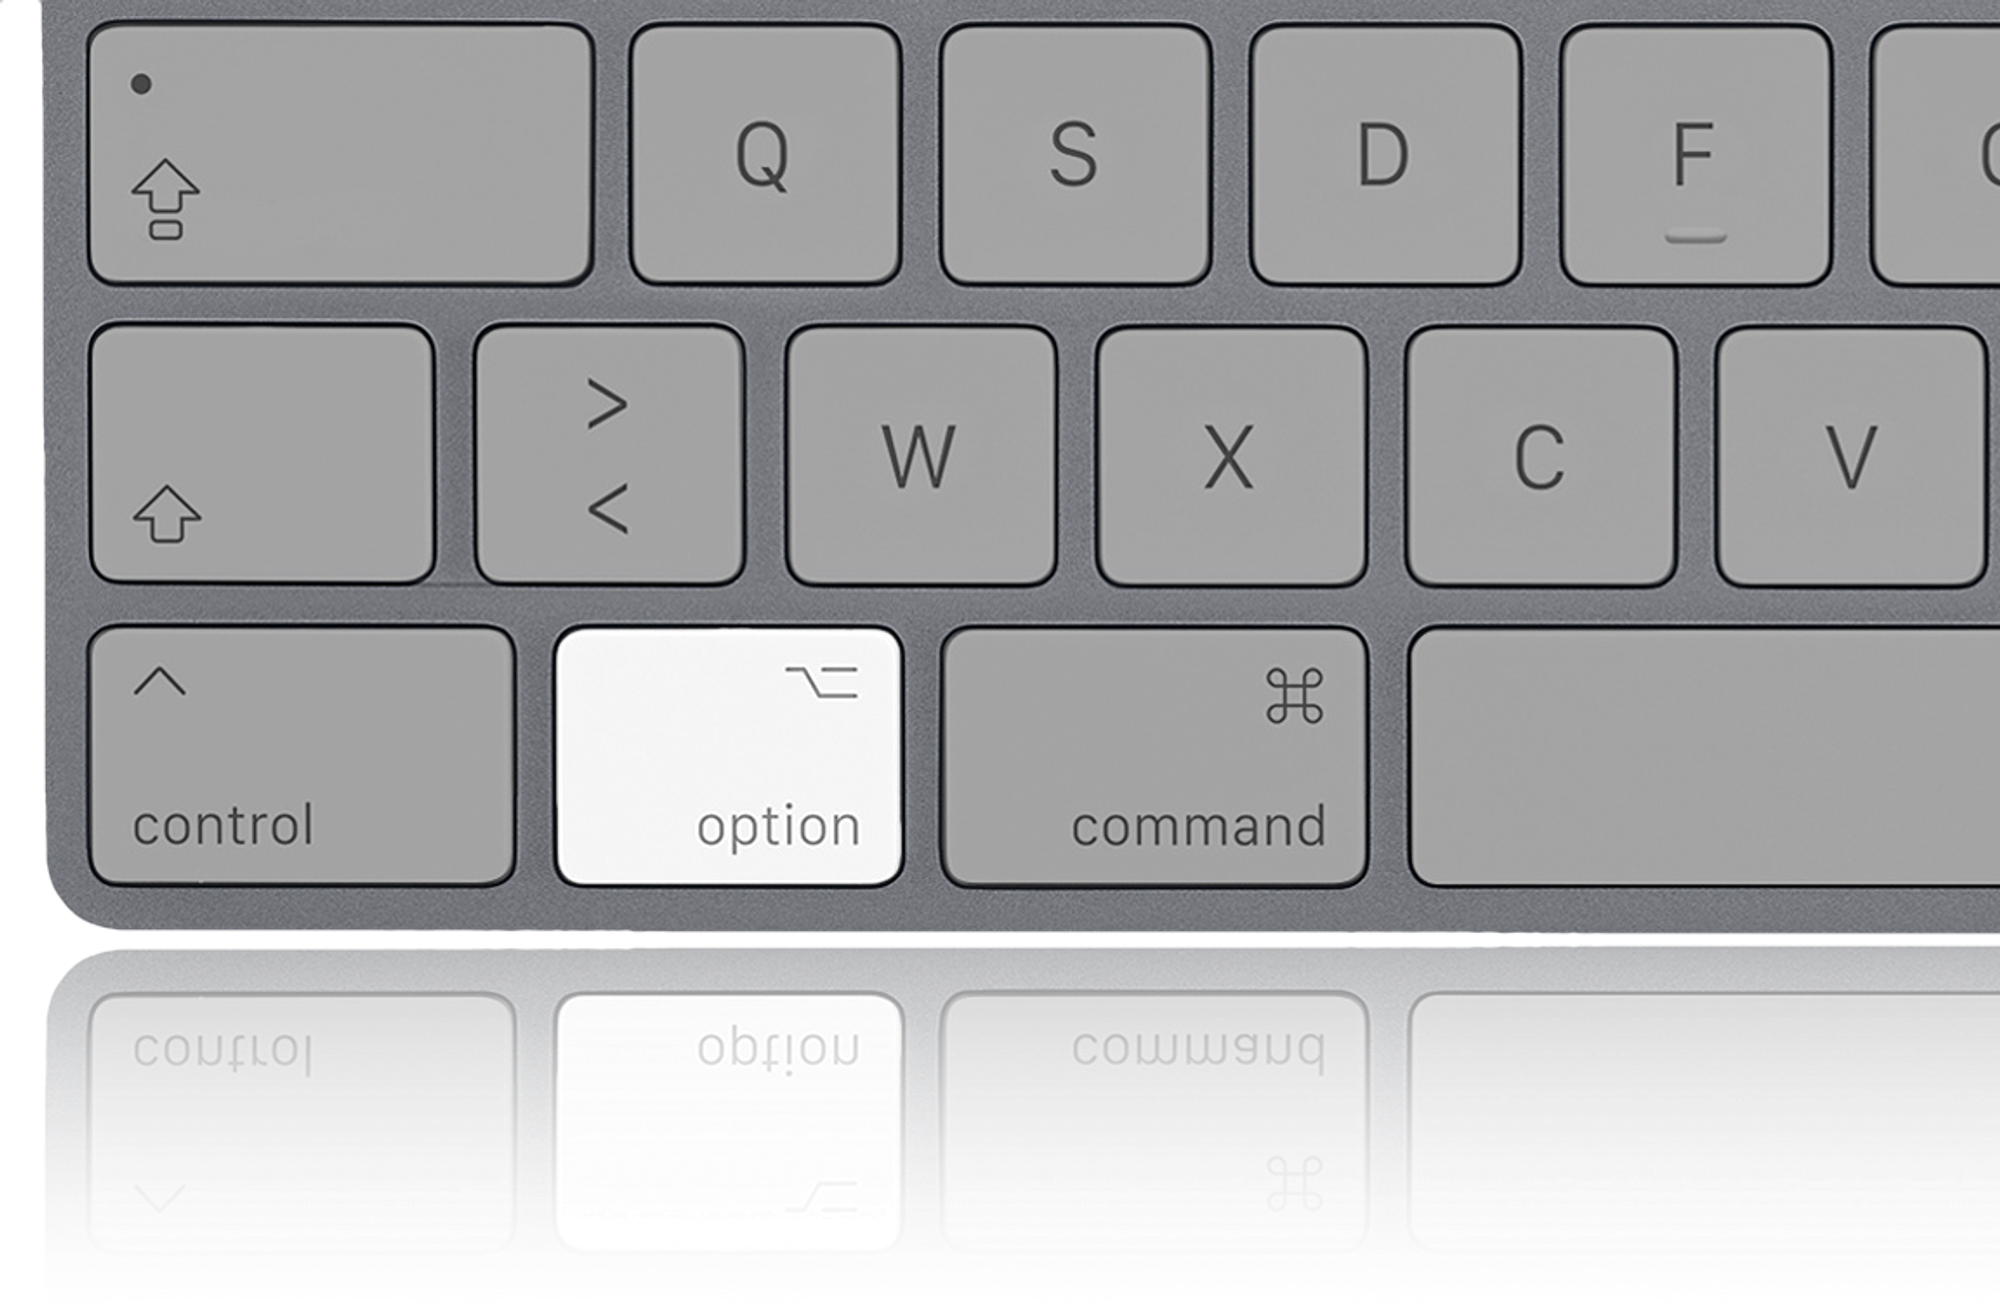 Command на клавиатуре. Макбук кнопка оптион. Альт на клавиатуре Мак. Клавиша option на Mac. Alt/option клавиша.